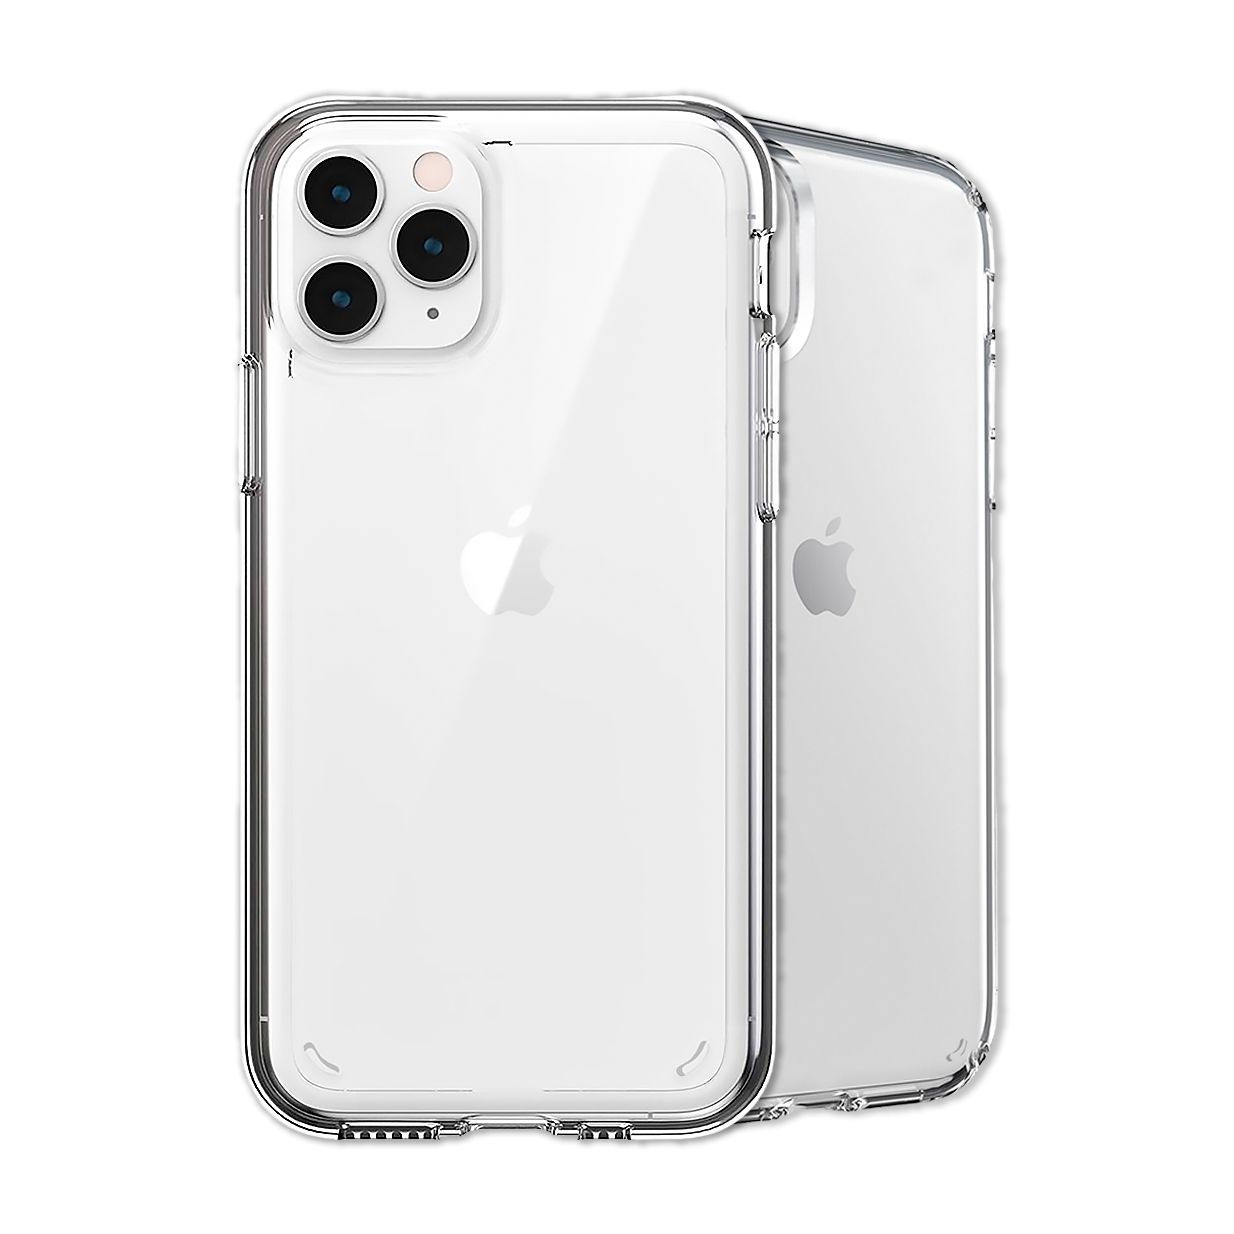 Capa Case Silicone Iphone 11 pro Original - Fujicell - Fujicell Acessórios